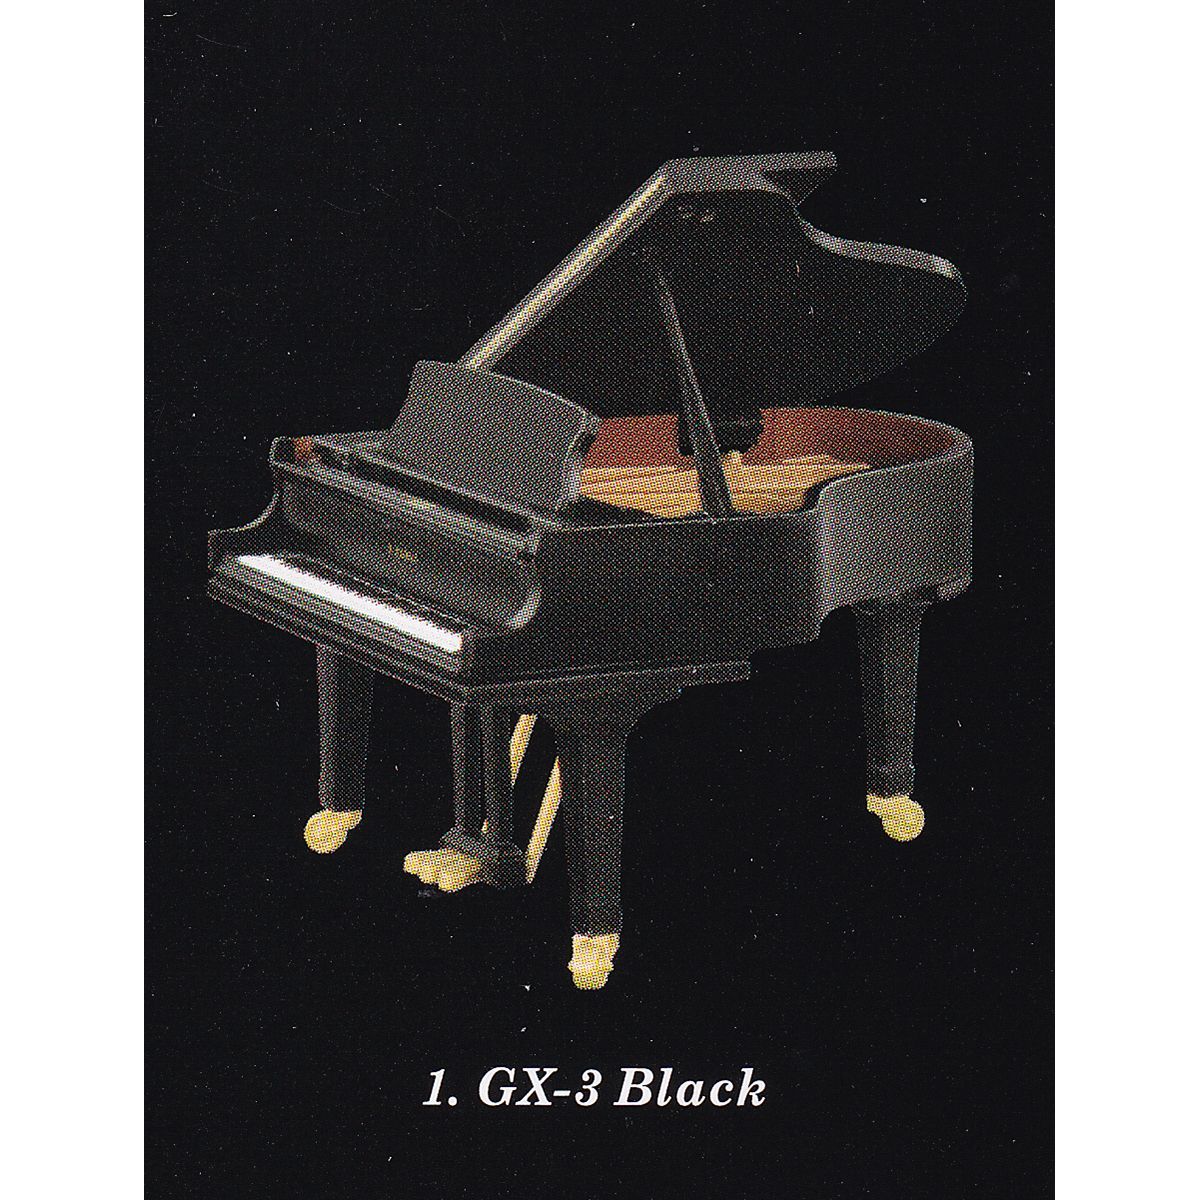 1.GX-3 Black 【KAWAI ミニチュアコレクション ケンエレファント カワイ グランドピアノ グッズ フィギュア 楽器 音楽 模型 かわいい ガチャガチャ カプセルトイ】【即納 在庫品】【数量限定】…